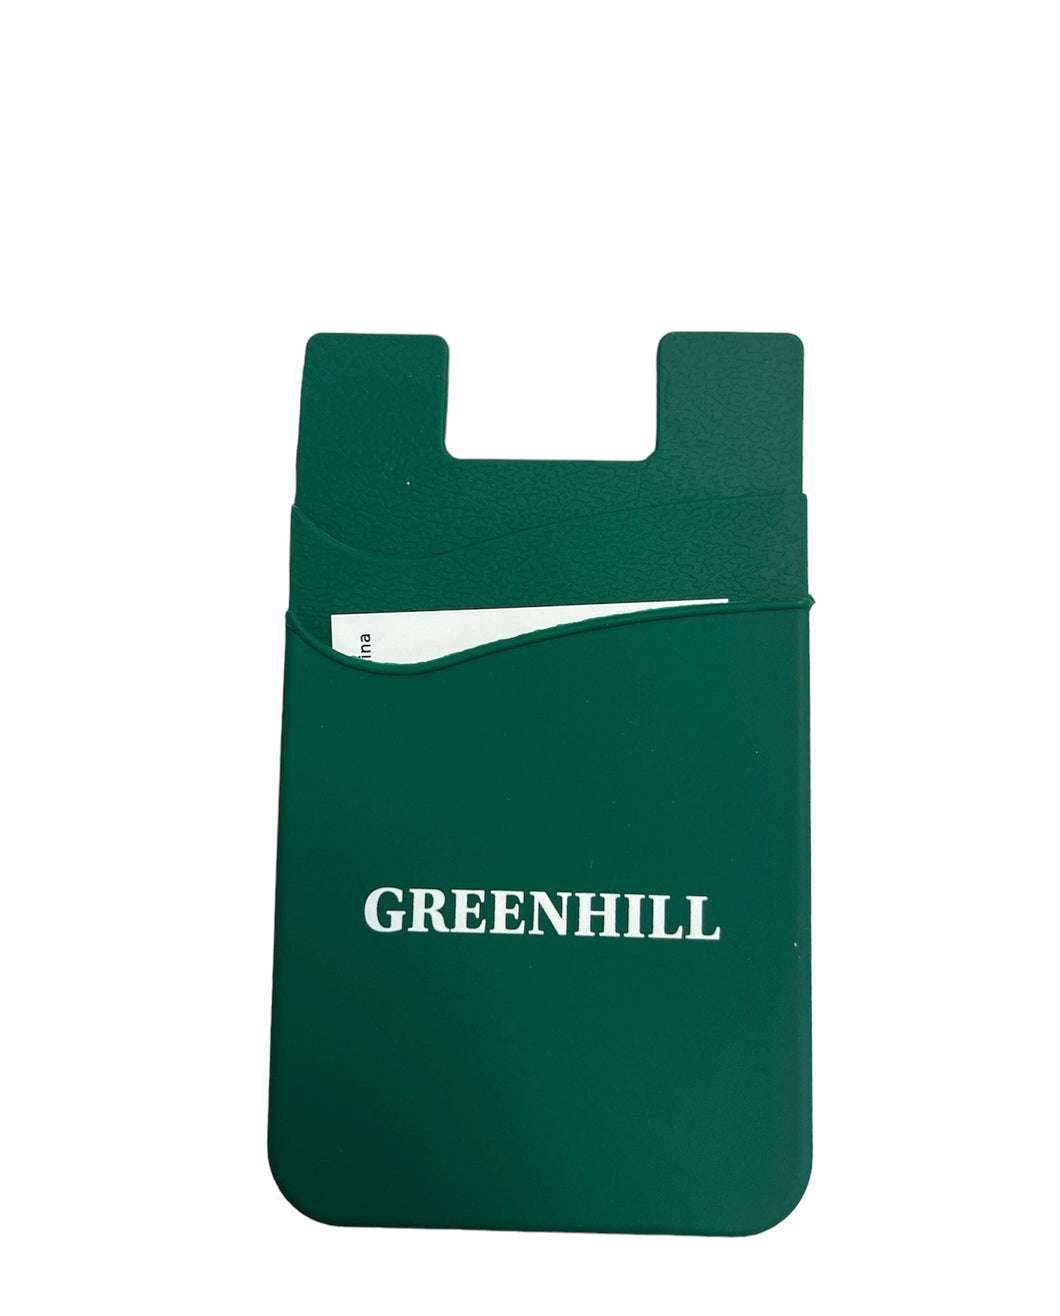 Greenhill Dual Pocket Phone Wallet